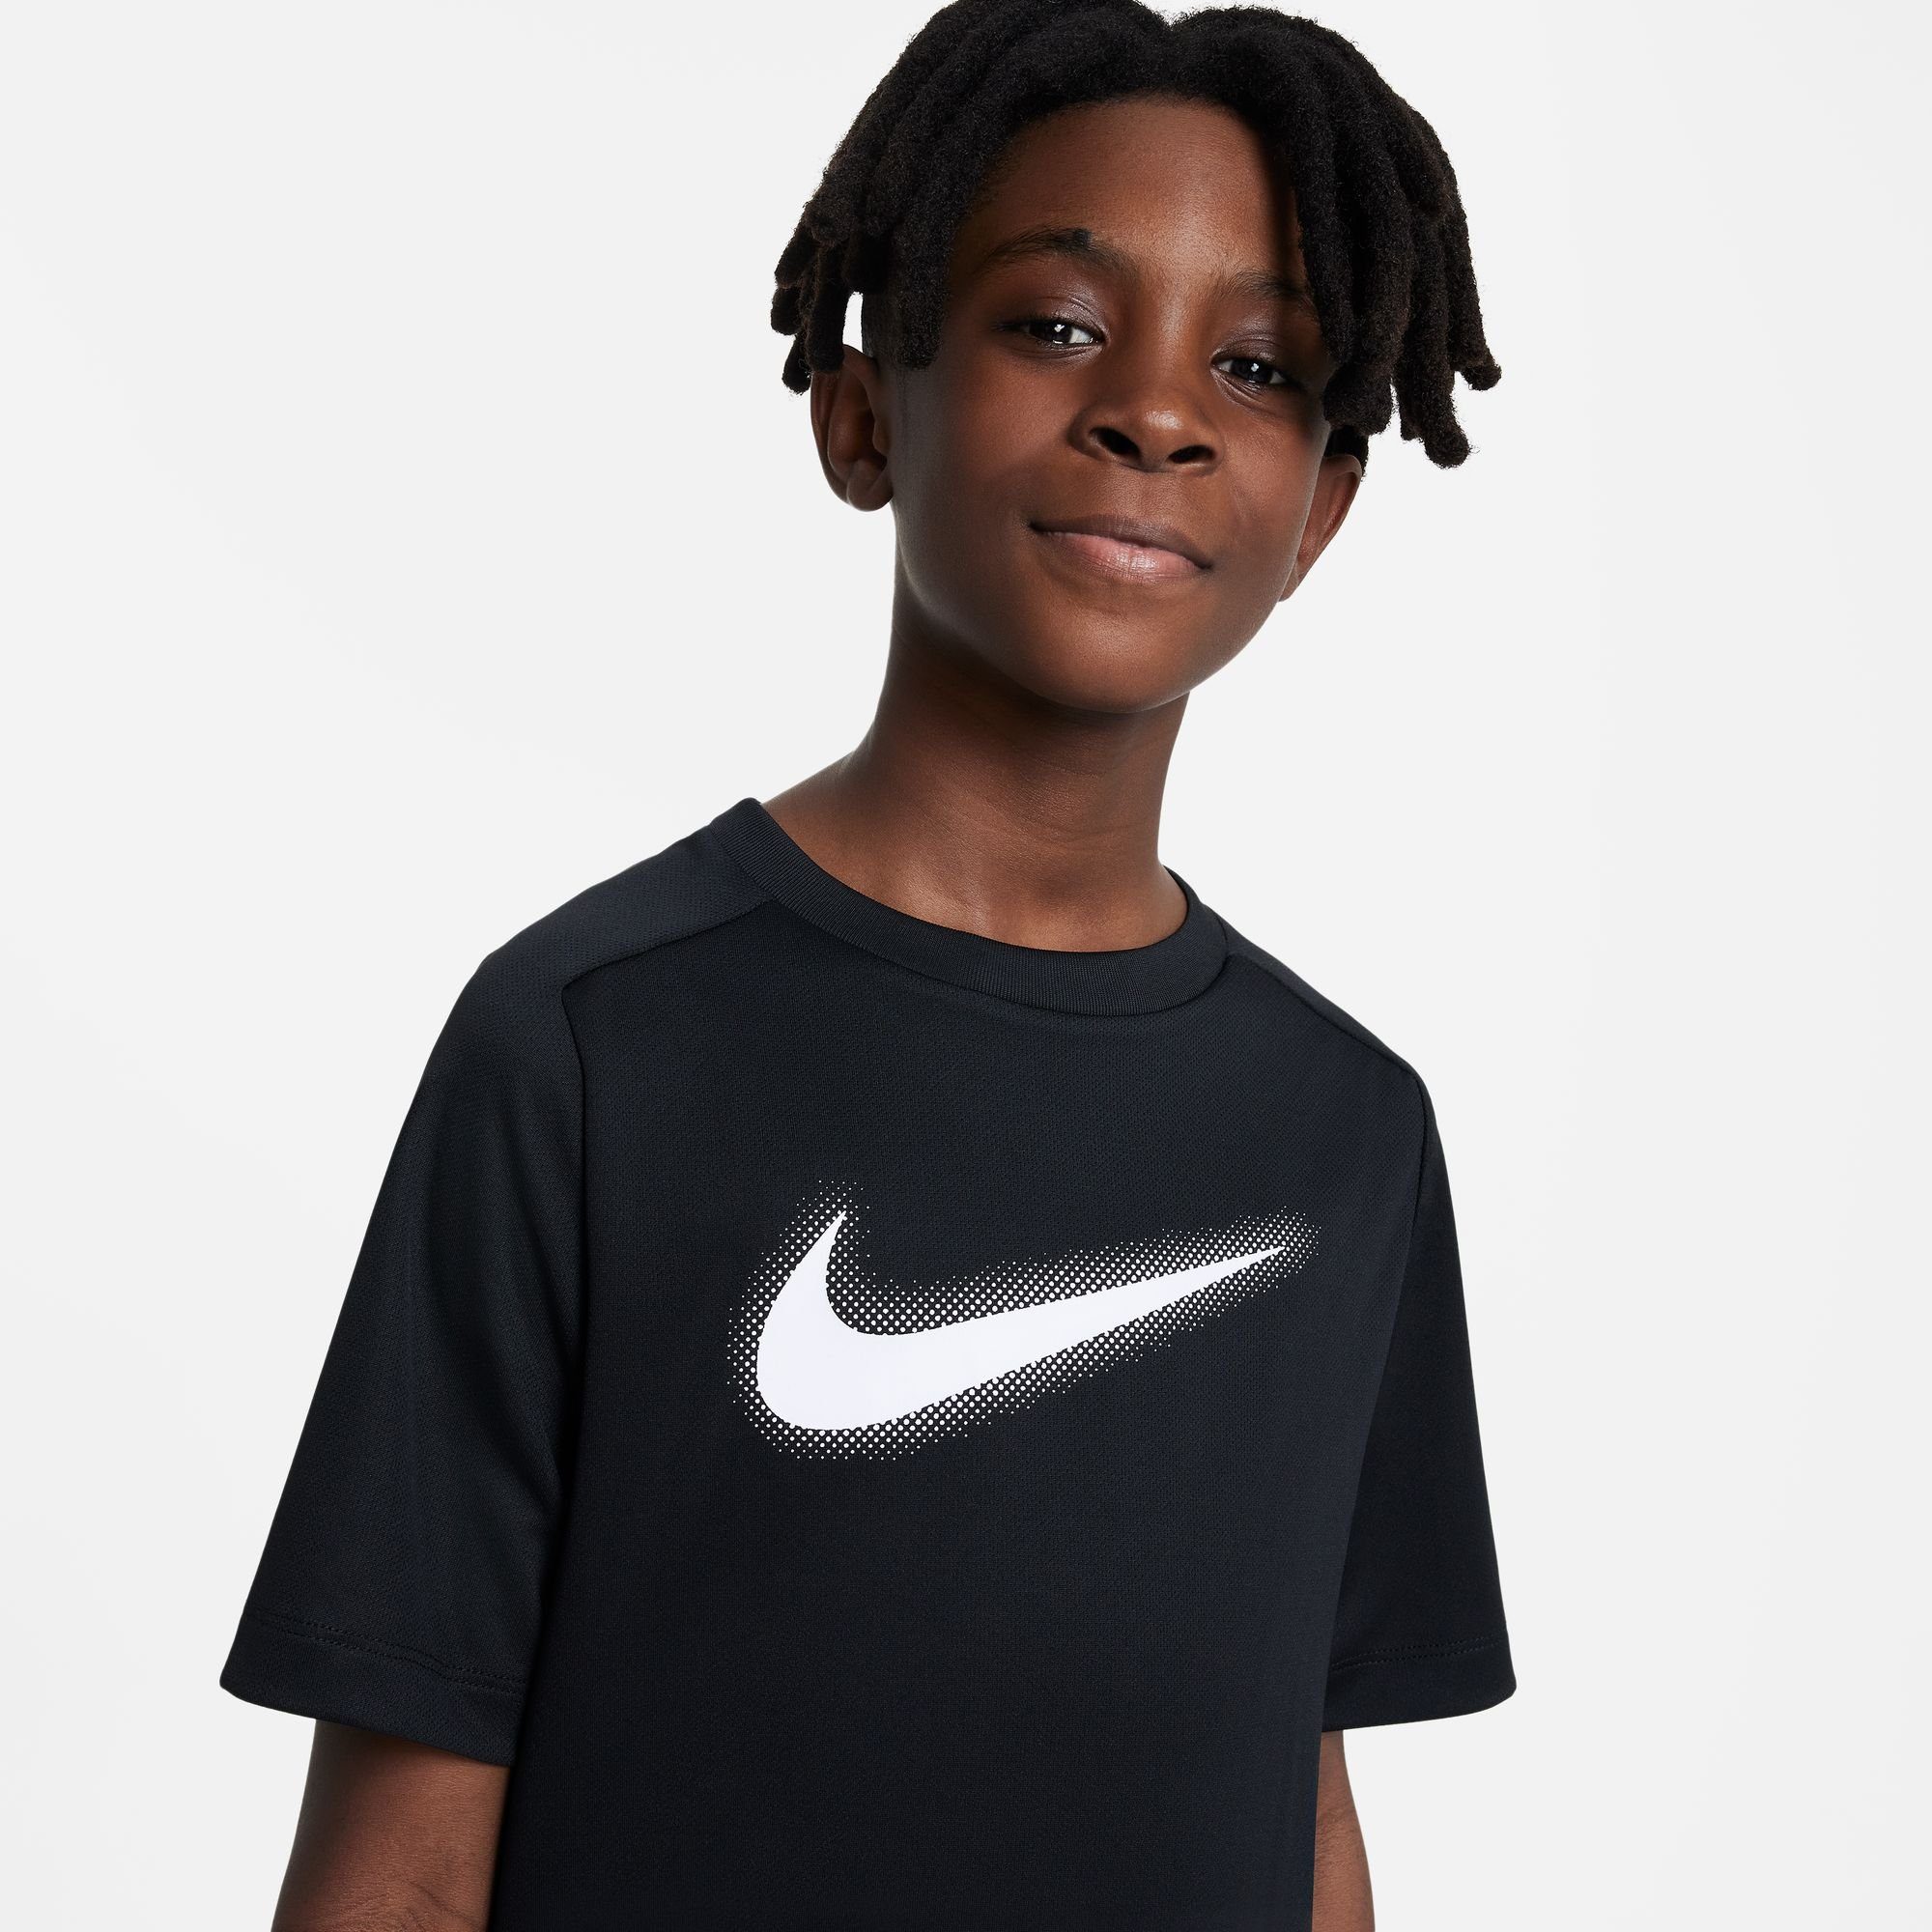 MULTI+ TOP Nike BLACK/WHITE (BOYS) DRI-FIT KIDS' Trainingsshirt GRAPHIC TRAINING BIG